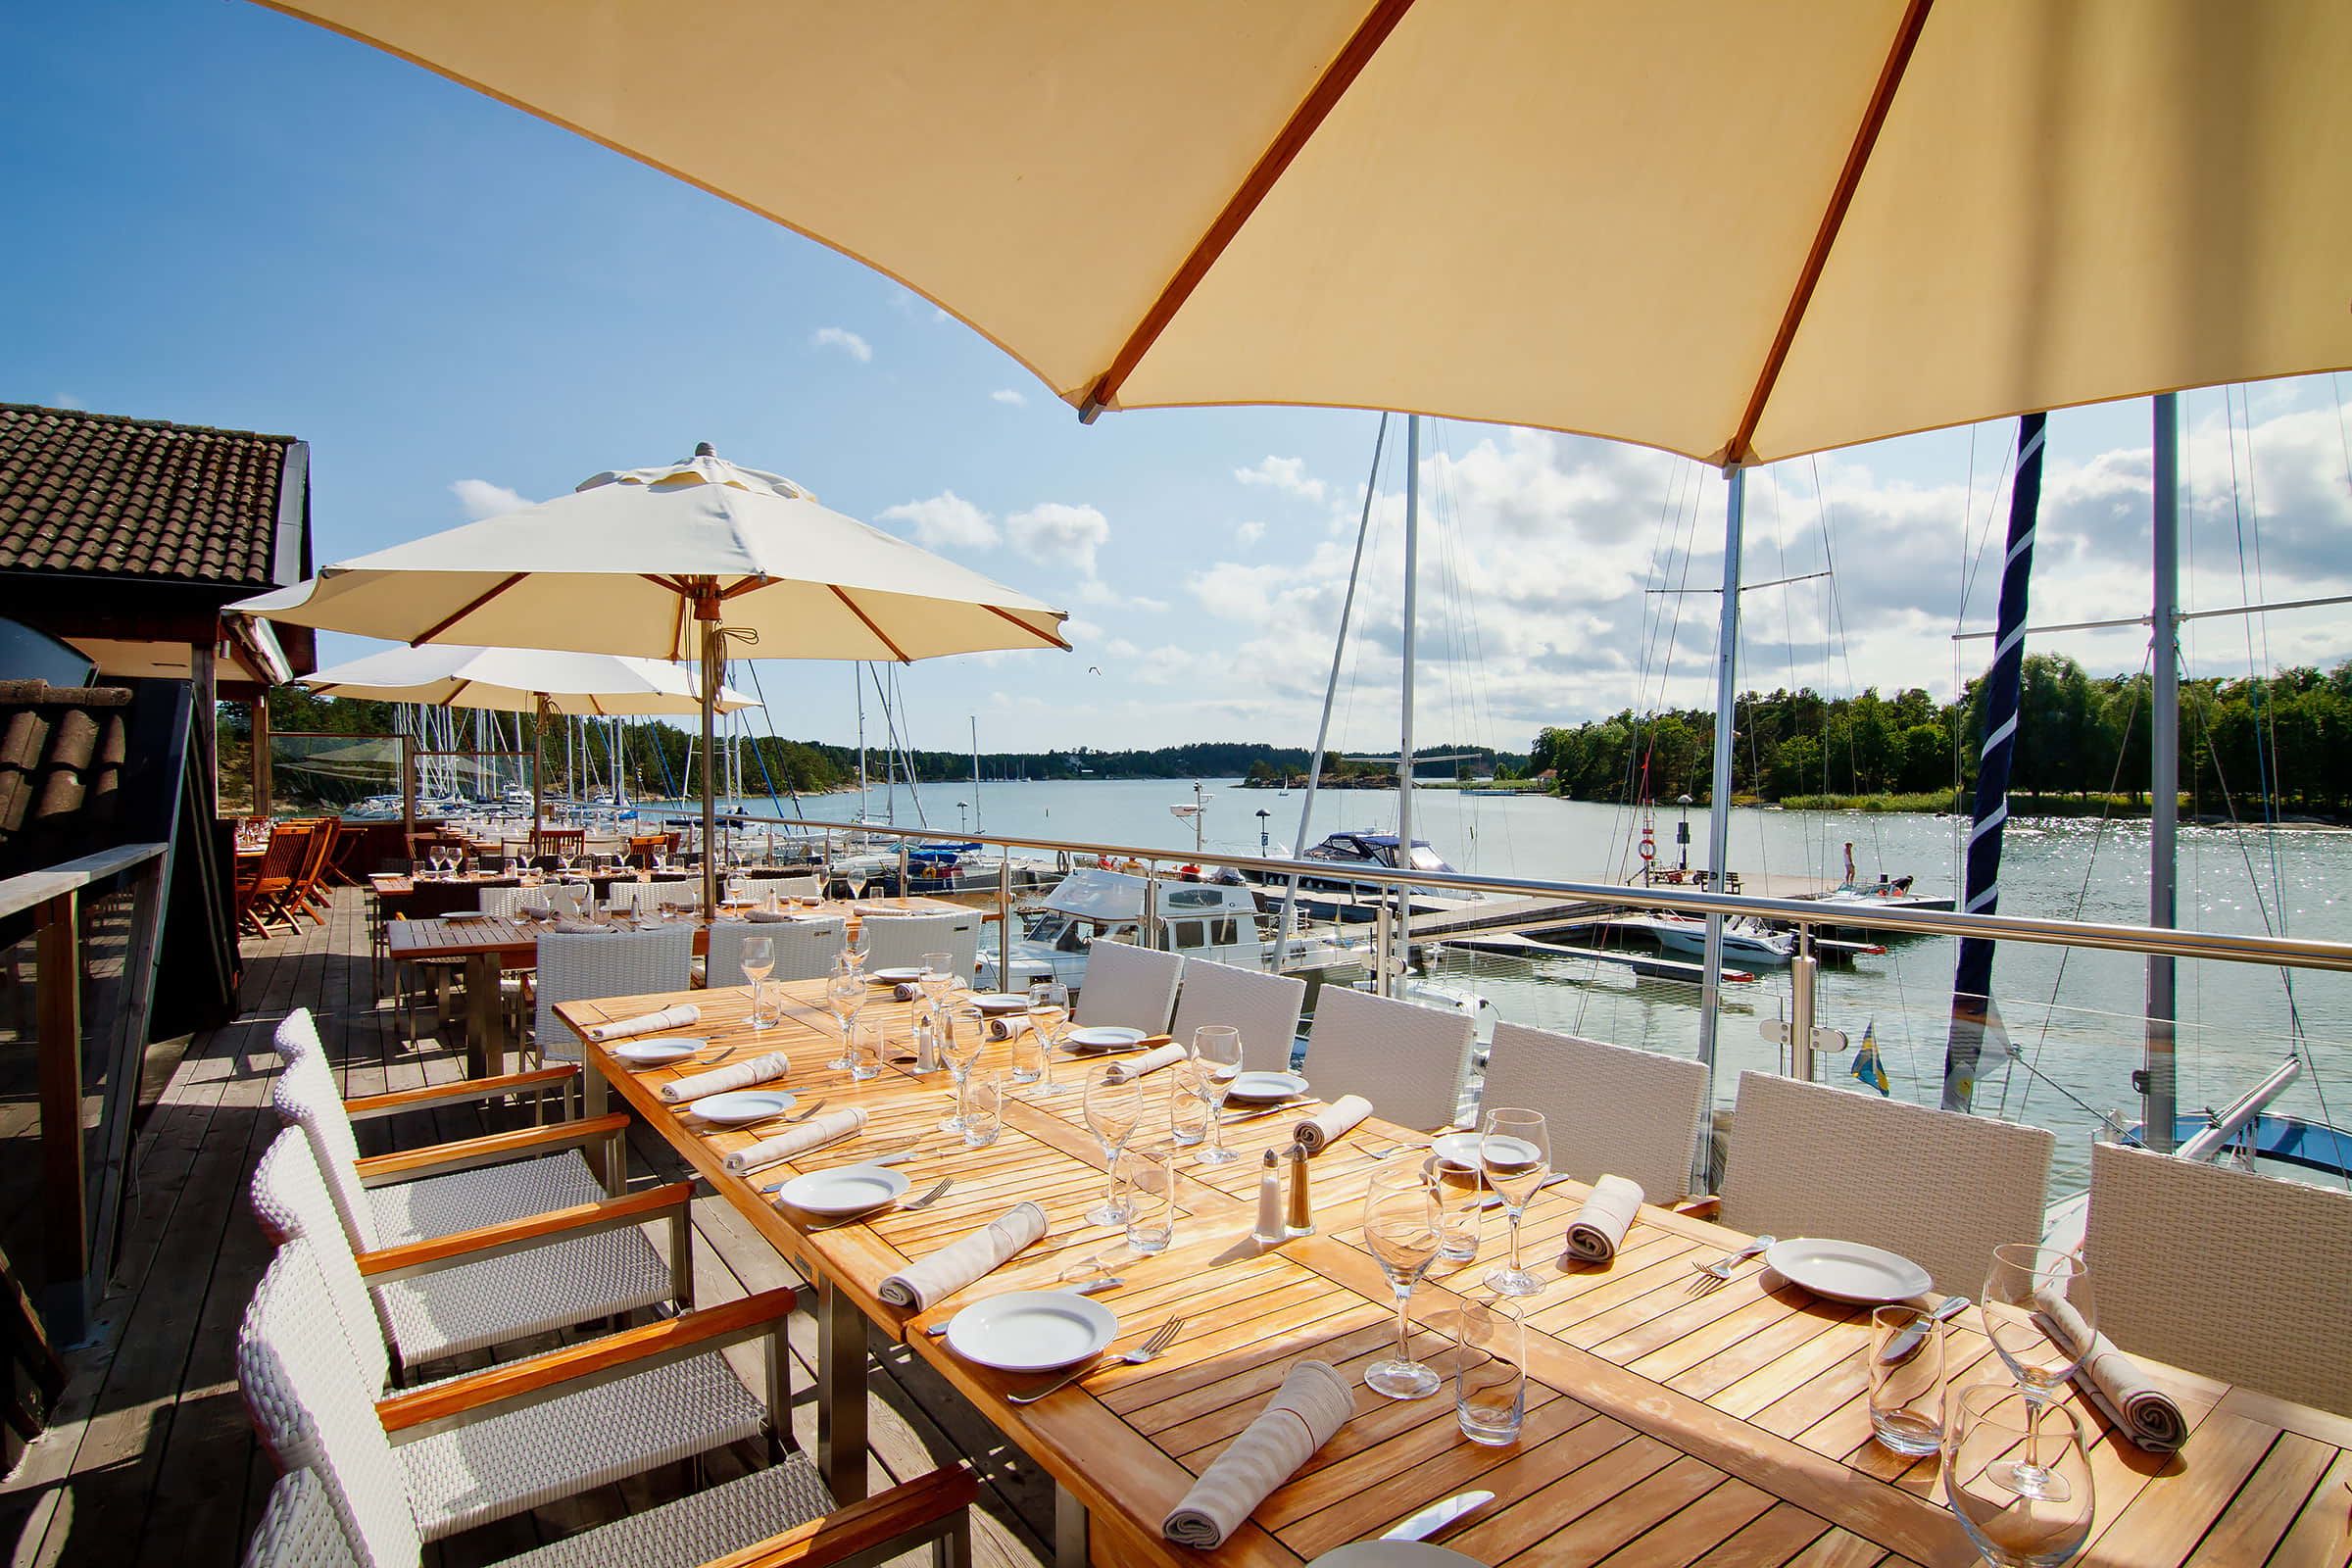 The best archipelago restaurants in and around Stockholm